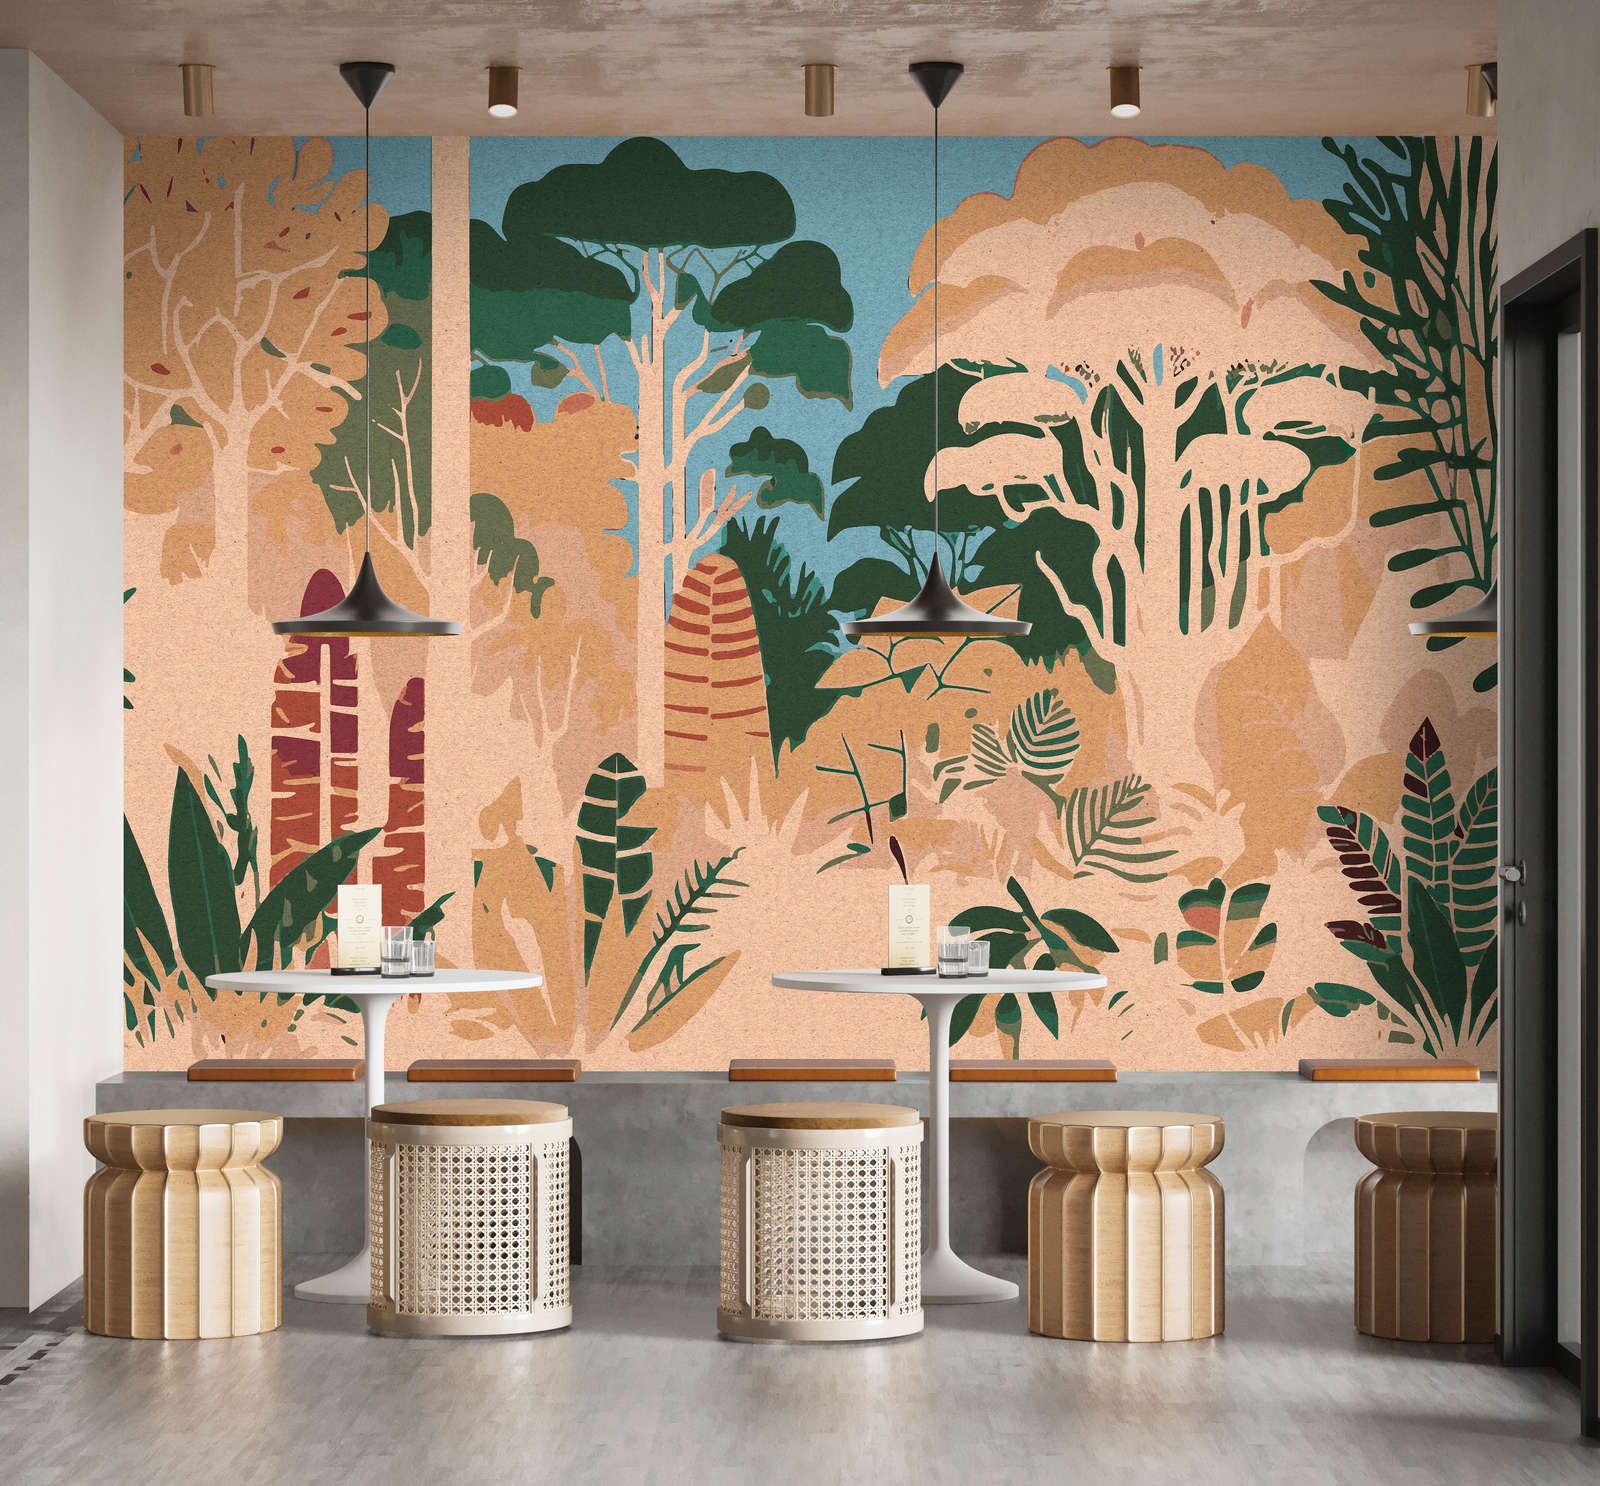             Photo wallpaper »elara« - Abstract savannah motif with kraft paper texture - Lightly textured non-woven fabric
        